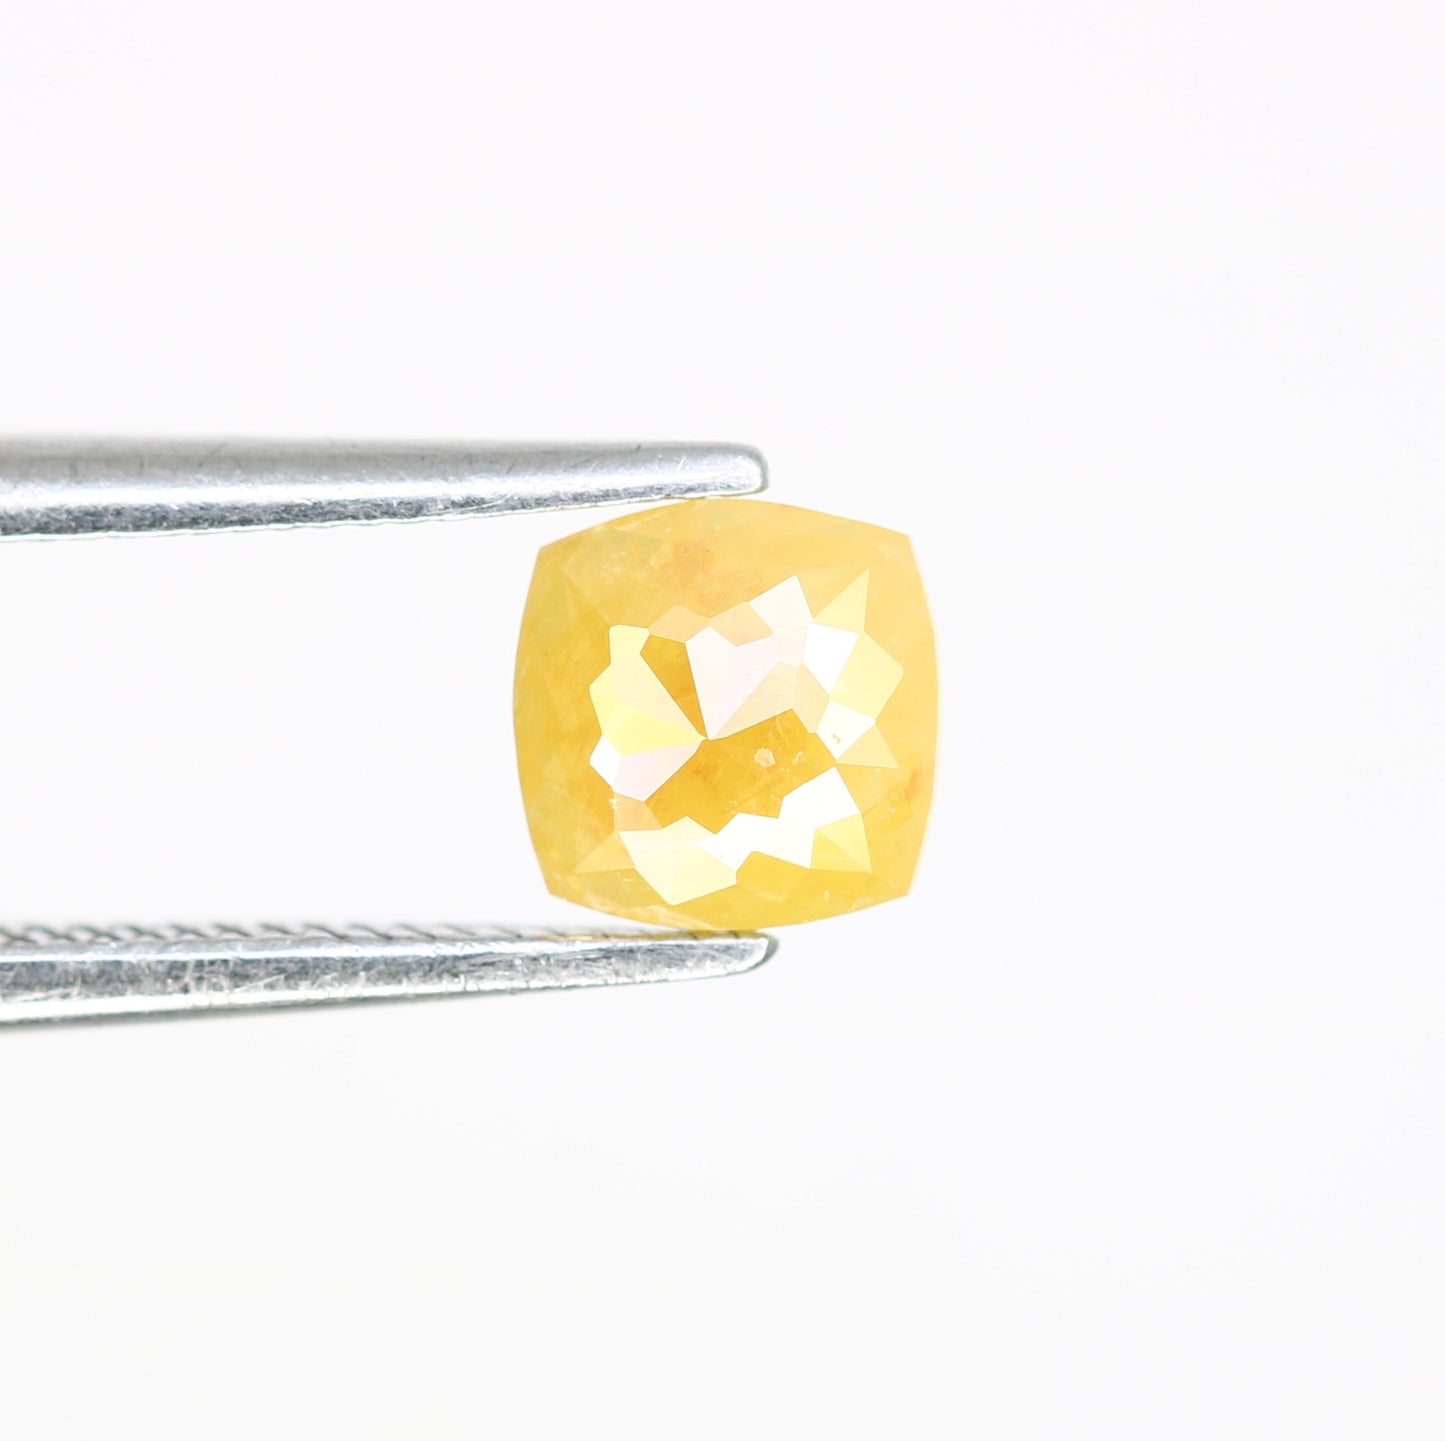 0.52 CT 5.20 MM Cushion Shape Yellow Fancy Diamond For Designer Ring